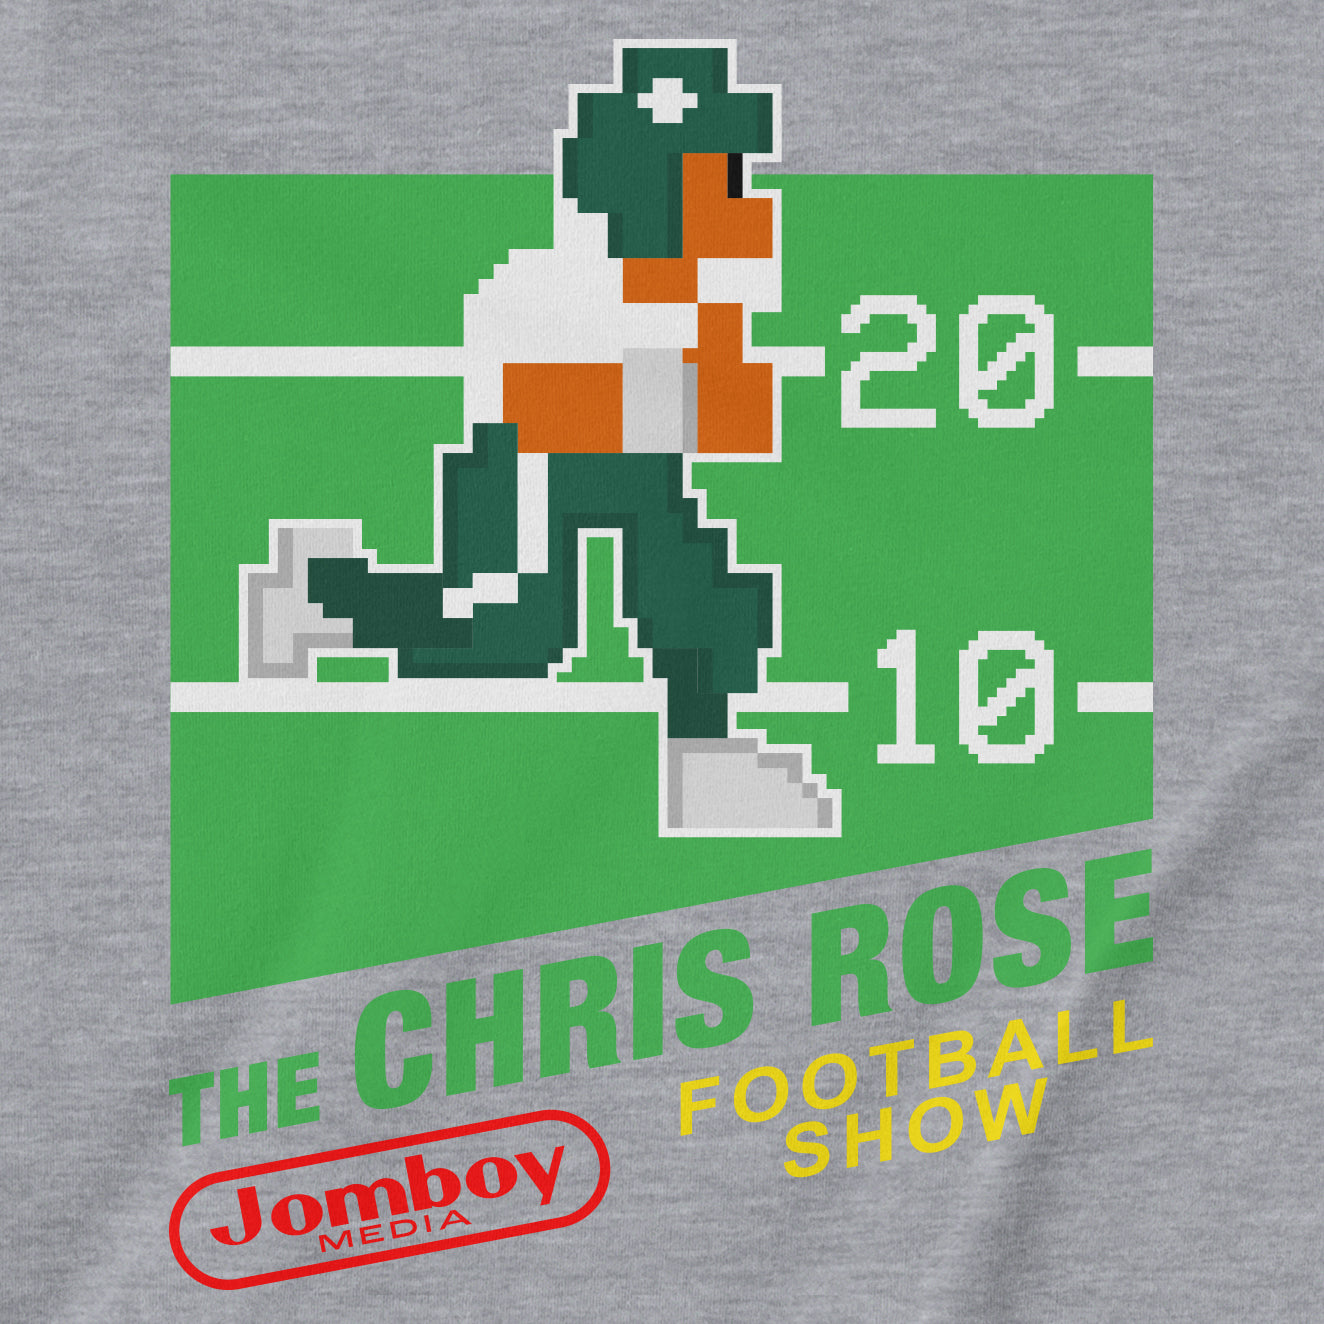 The Chris Rose Football Show | Gametime T-Shirt